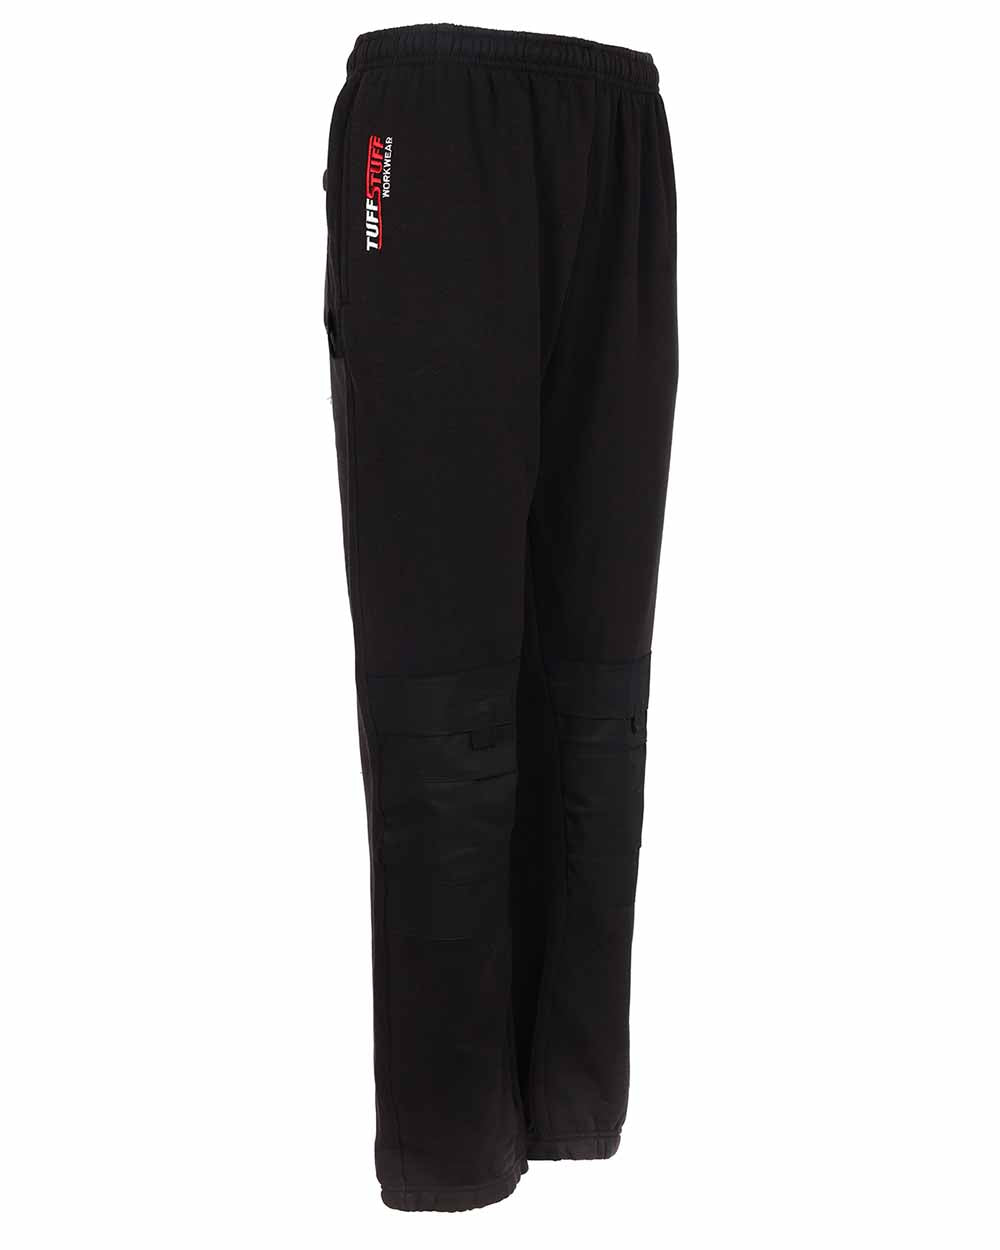 Side view showing elasticated waist detail Black work joggers TuffStuff Comfort Work Trouser in Black 